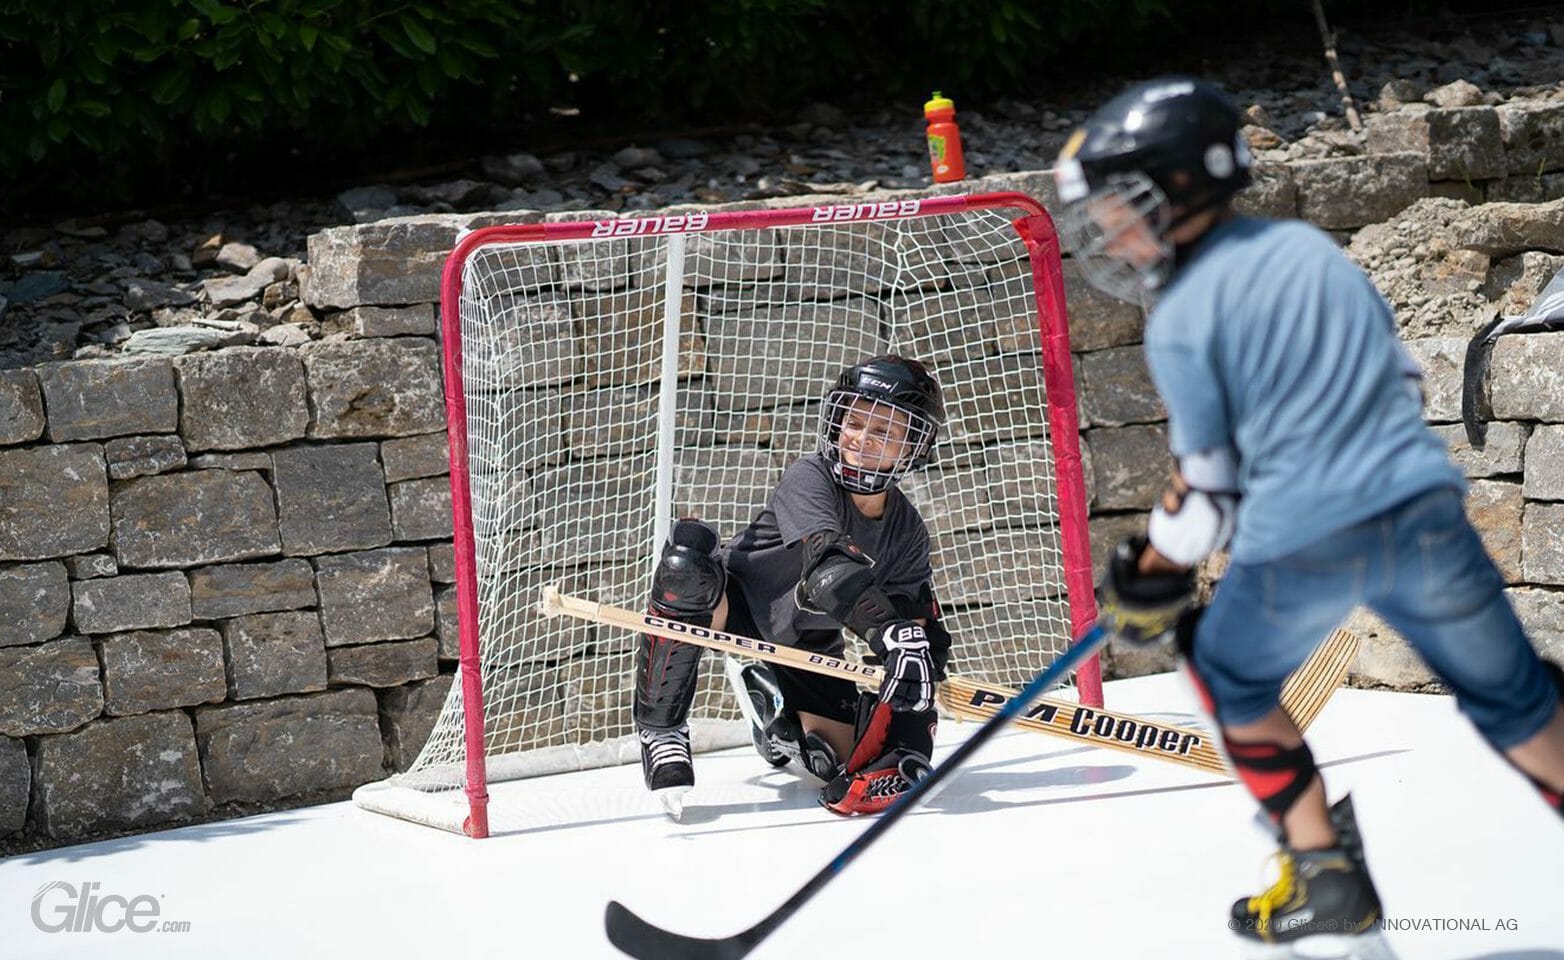 Children playing ice hockey on Glice